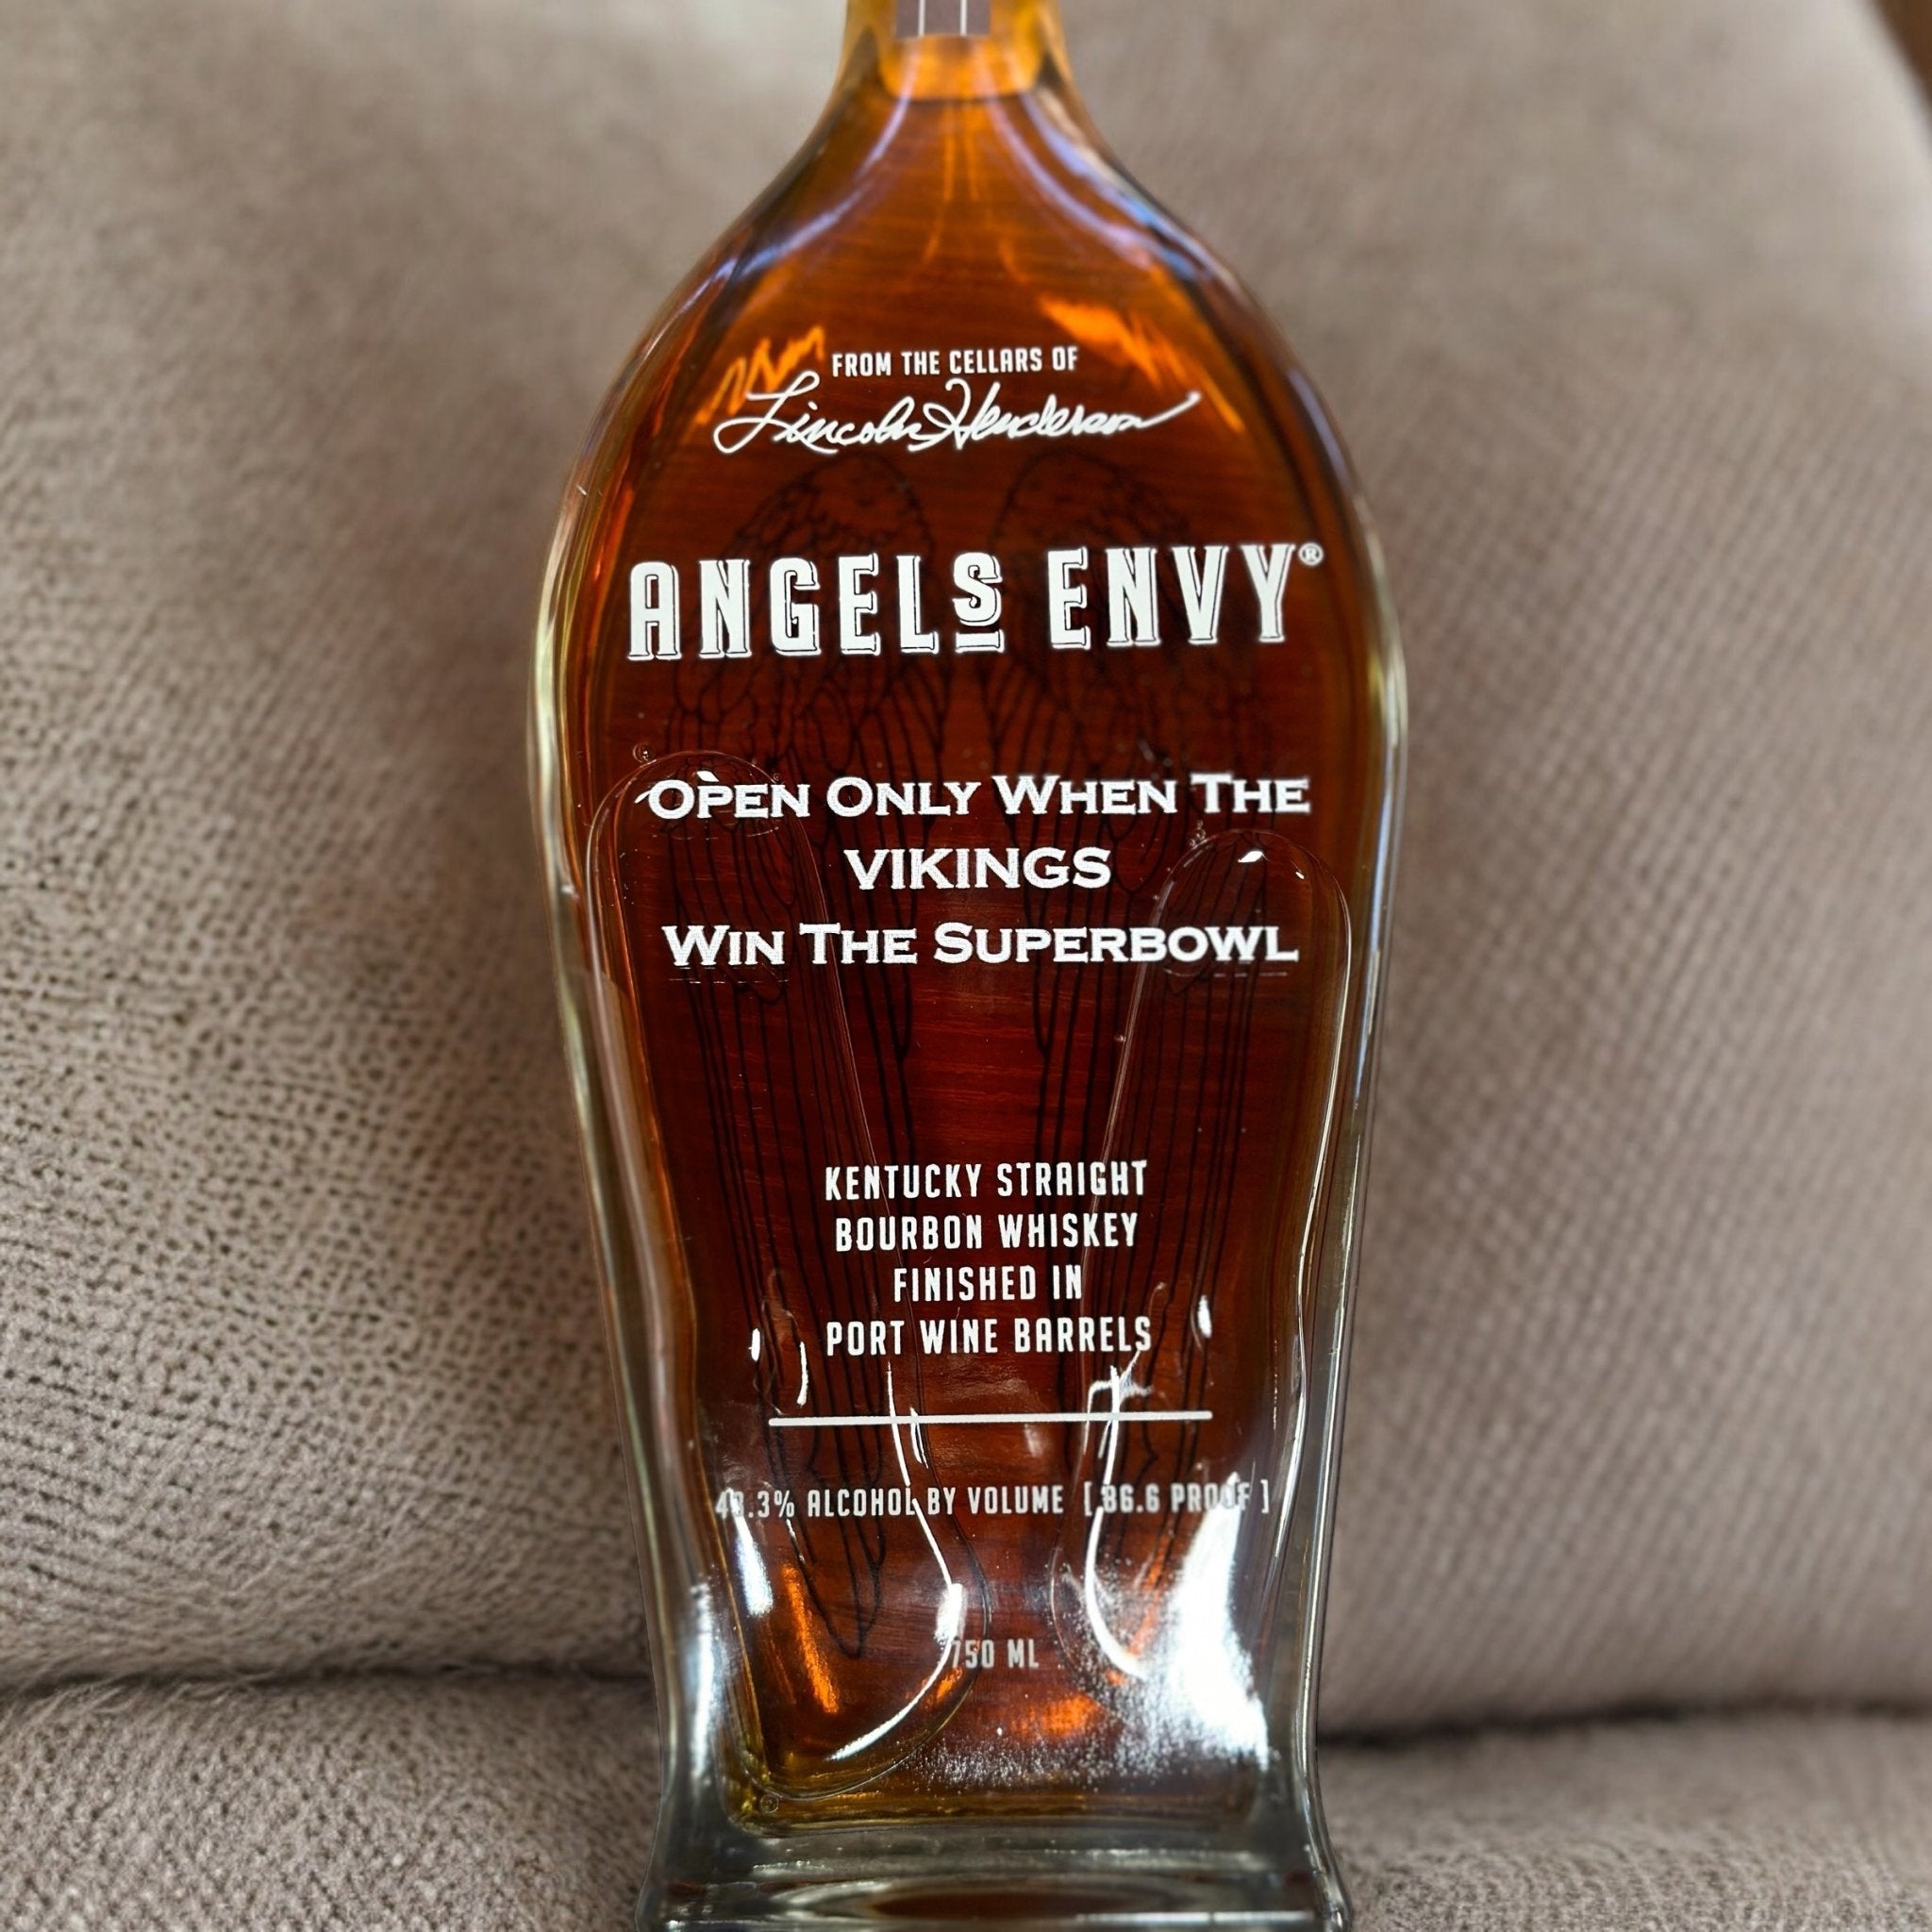 Angel's Envy Rye Whiskey Finished in Caribbean Rum Casks - Bottle Engraving